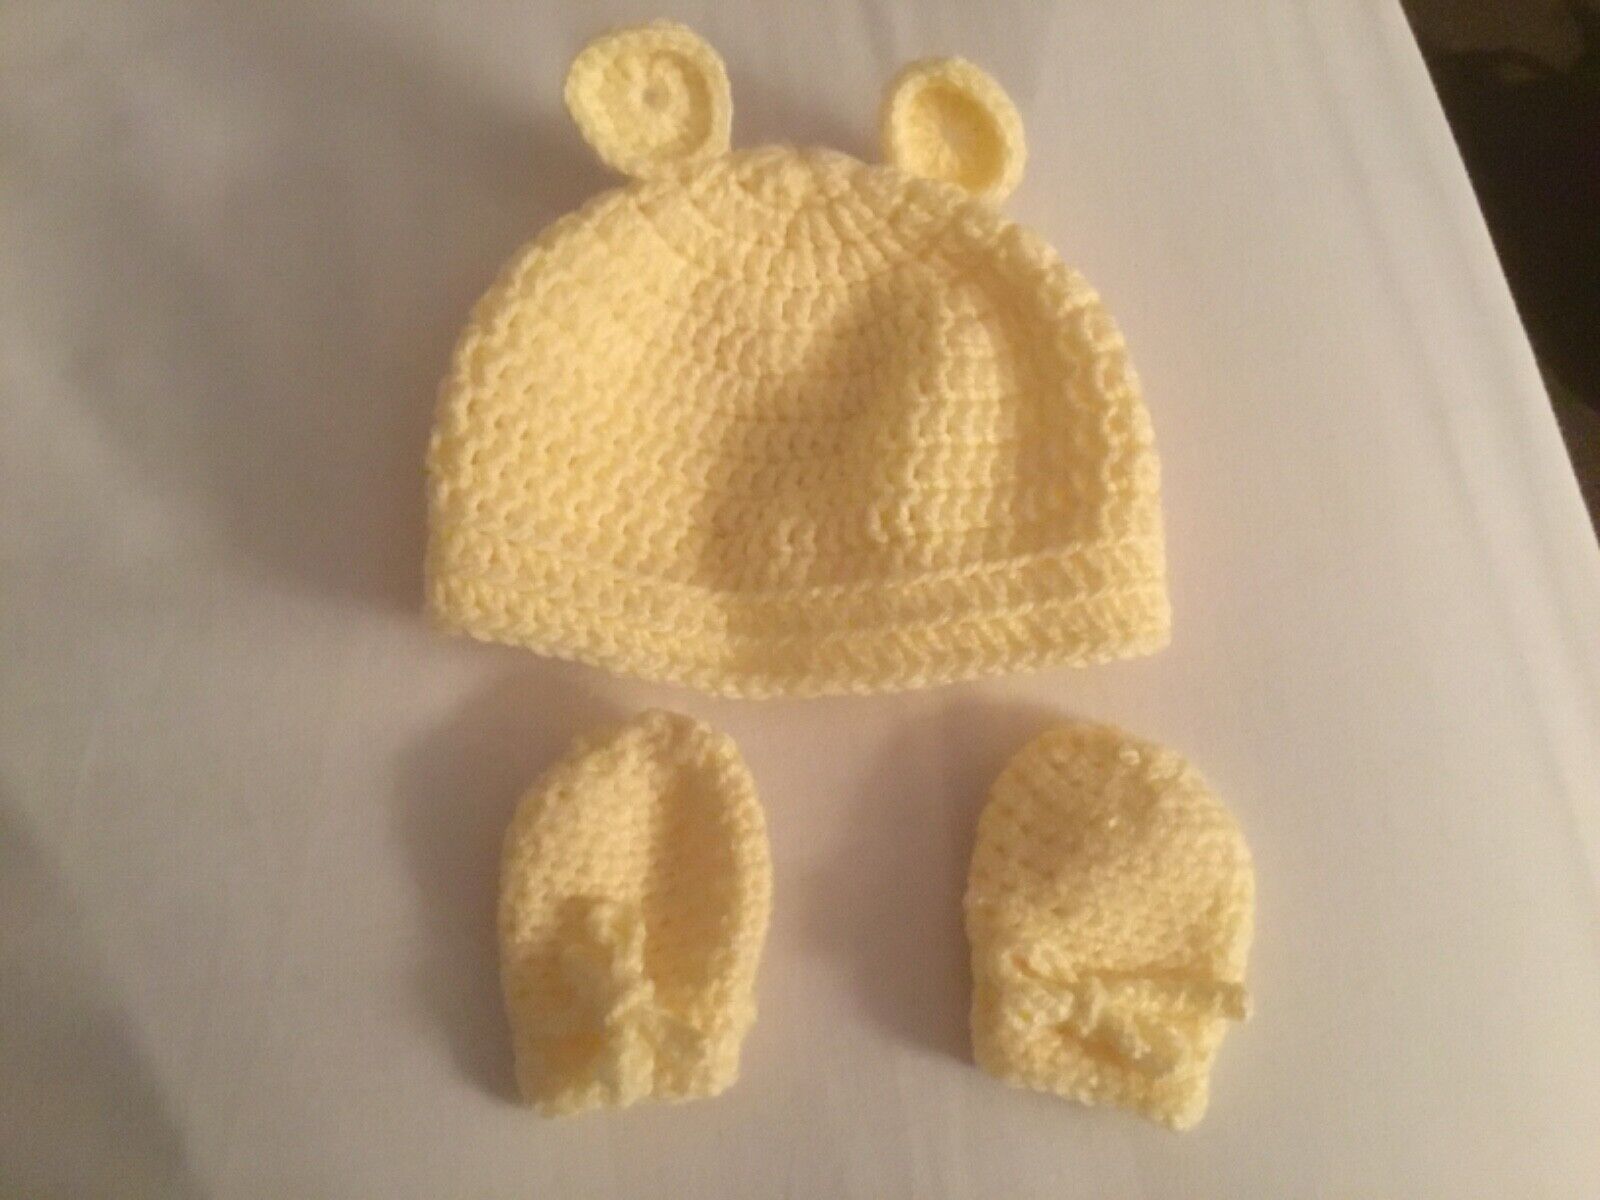 Handmade crochet baby yellow hat and scratch mittens set (New)